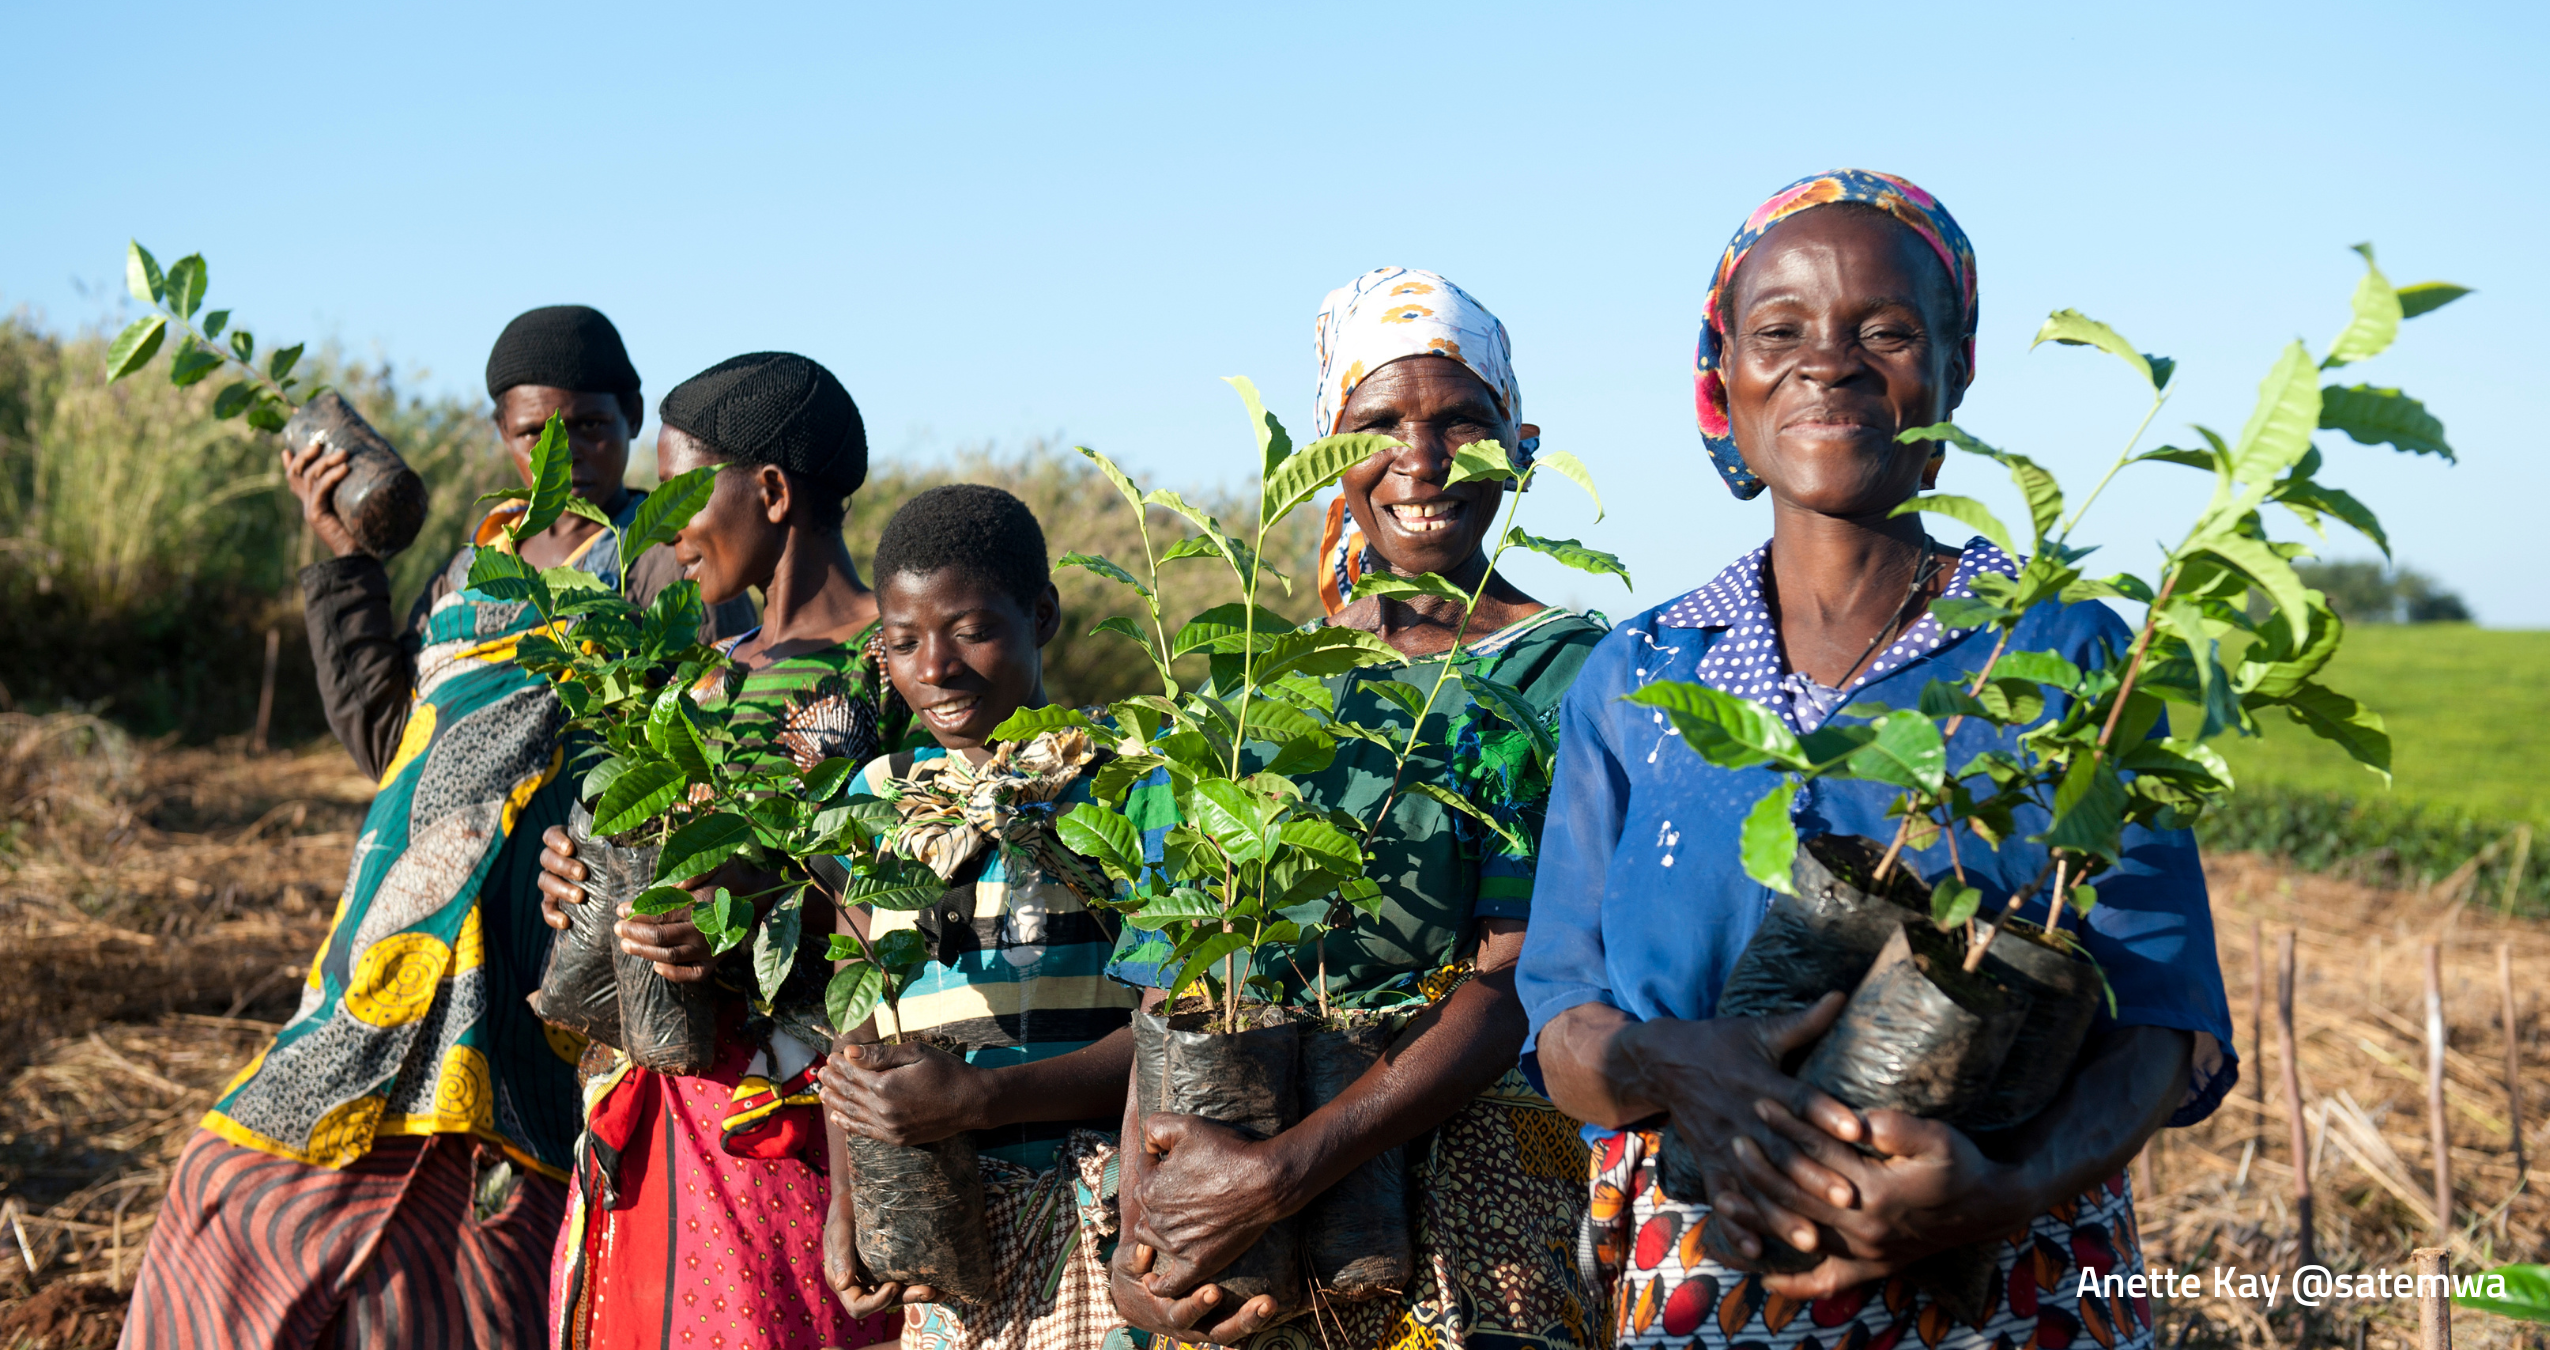 We joined the Satemwa Tree Planting Club!